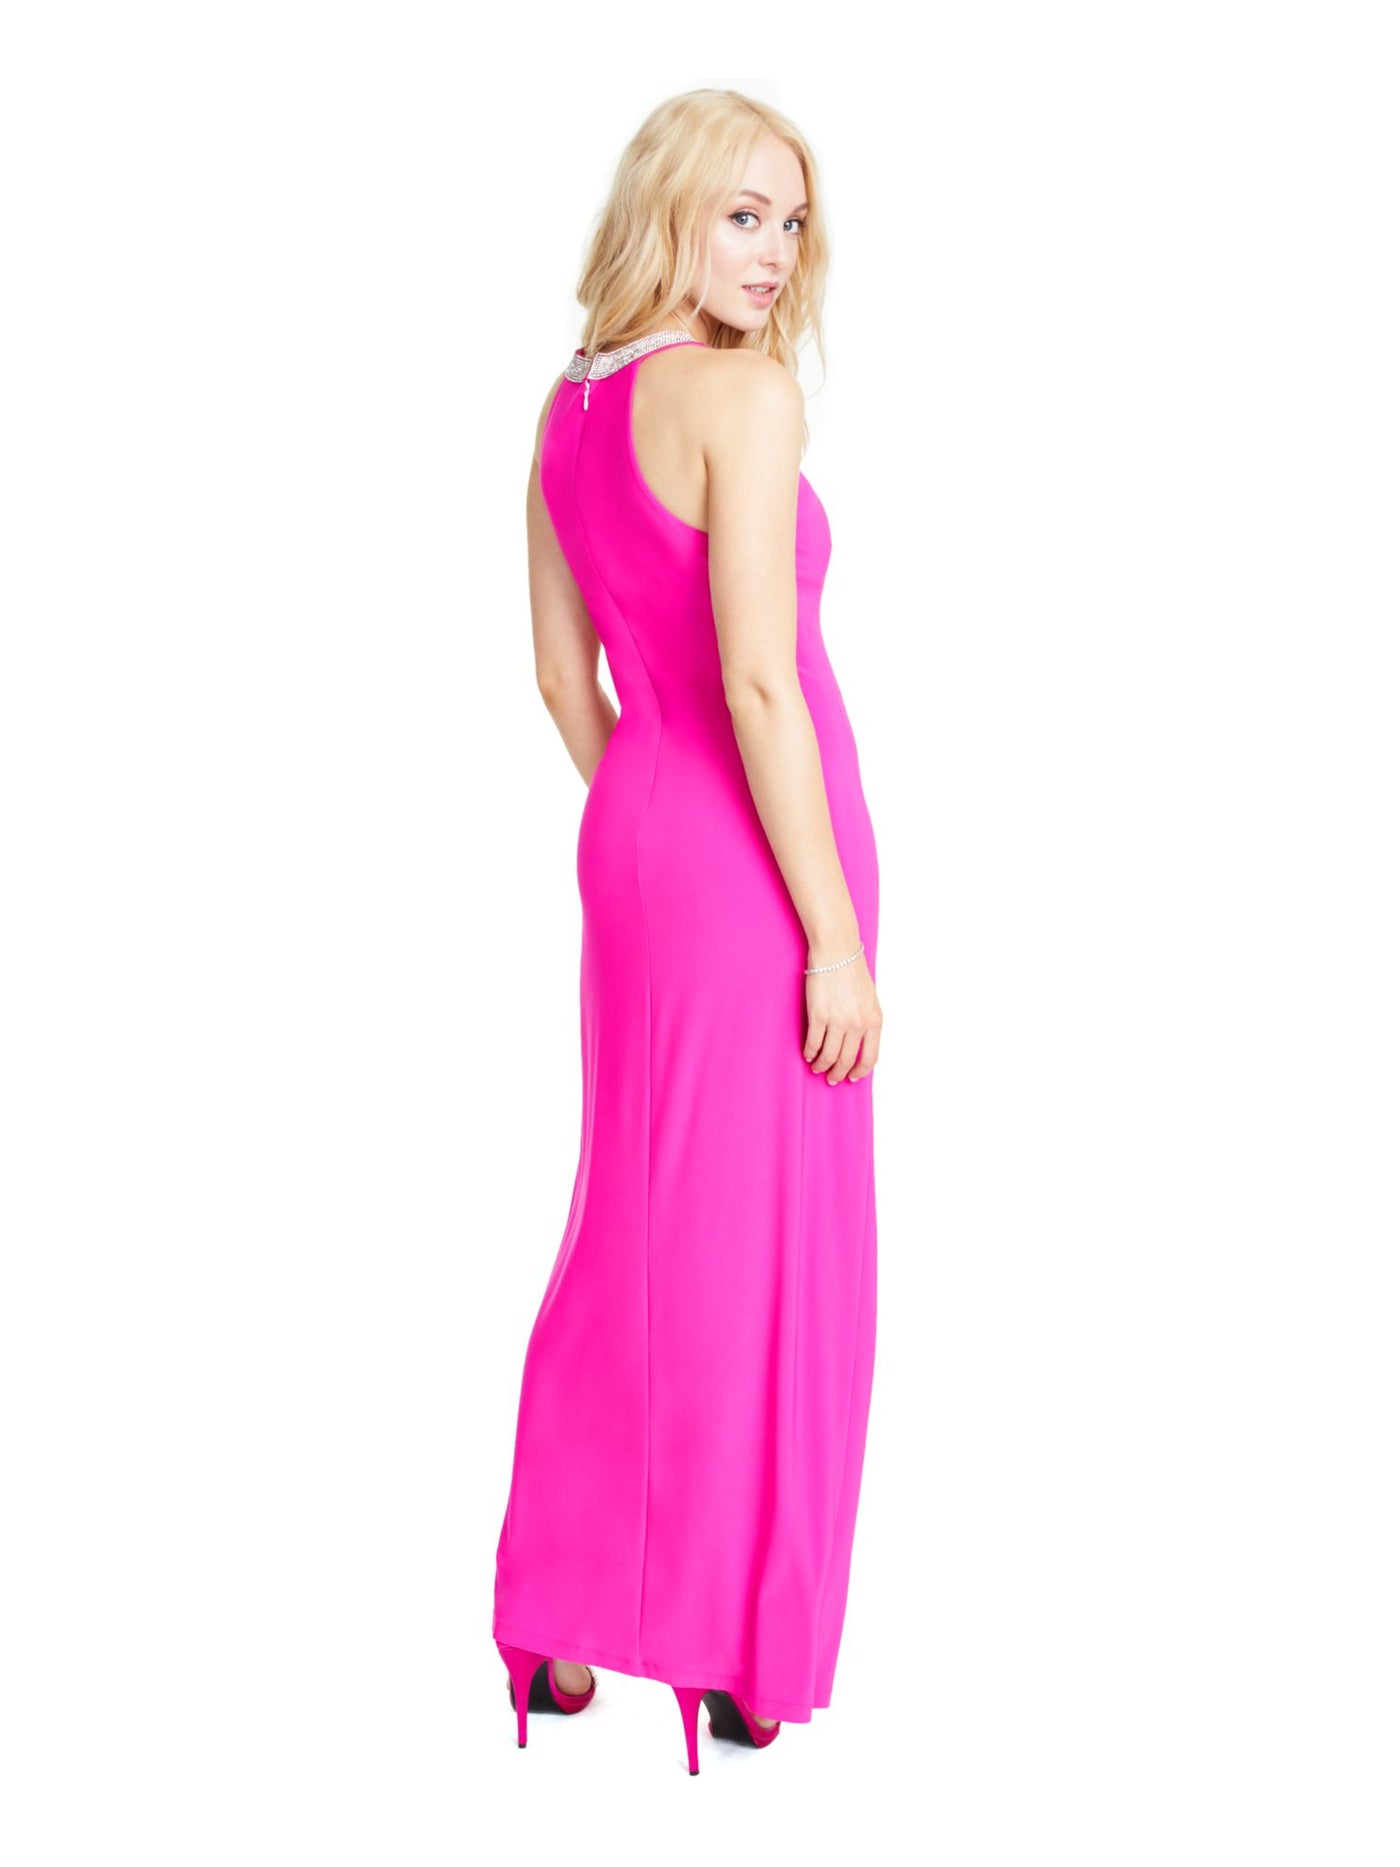 ROYALTY Womens Pink Slitted Sleeveless Halter Full-Length Formal Body Con Dress XS